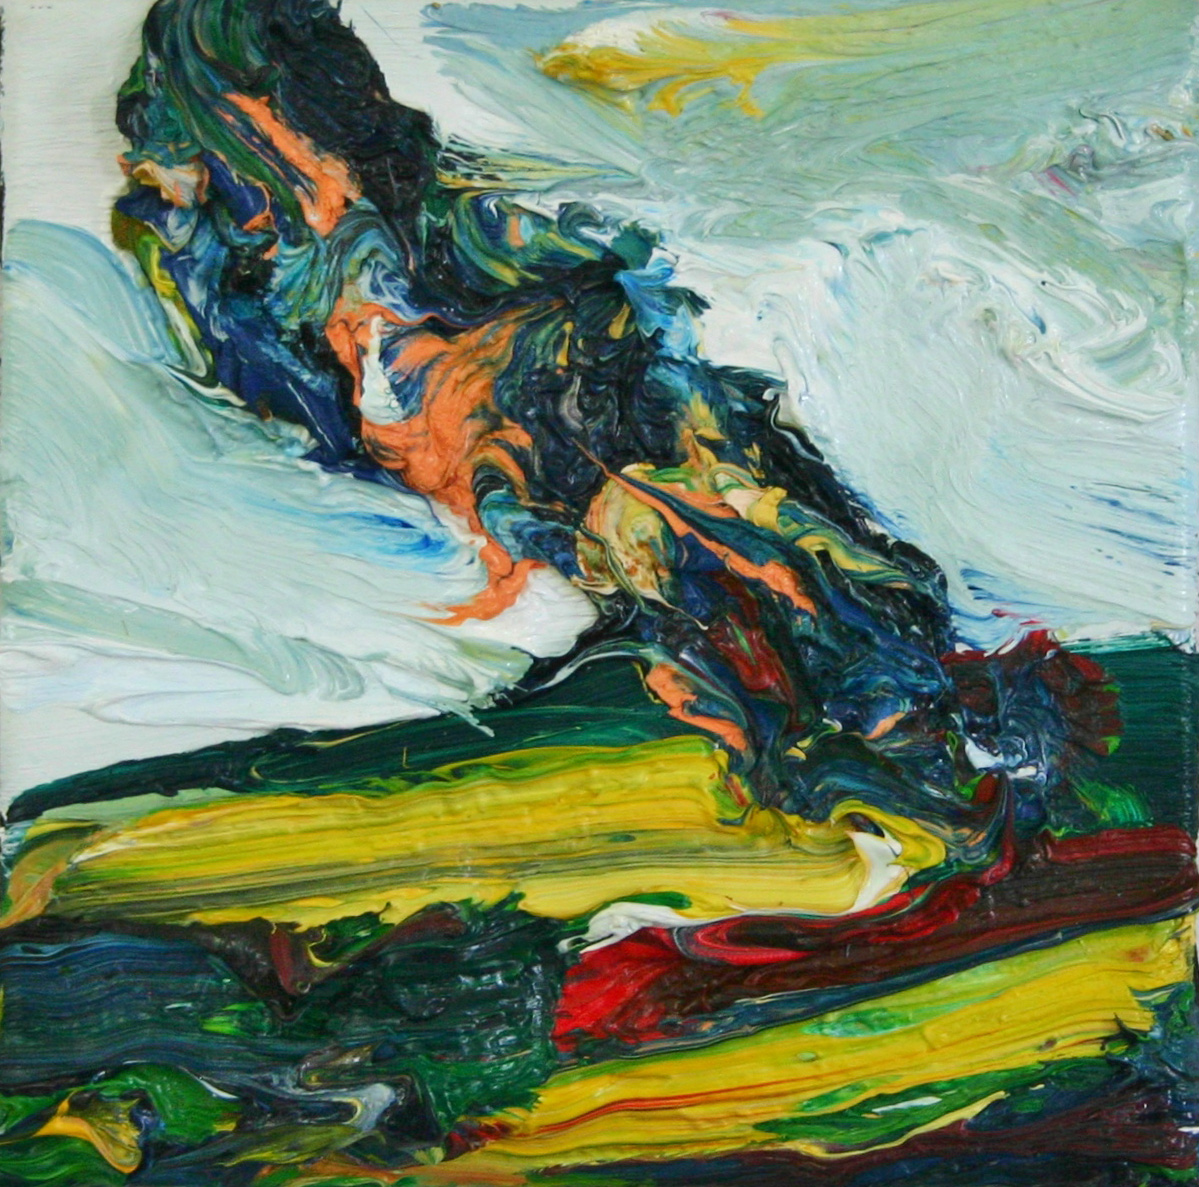 Harry Meyer, RAUCH, 2006, Öl auf Leinwand, 20 cm x 20 cm, Preis auf Anfrage, mey011kü